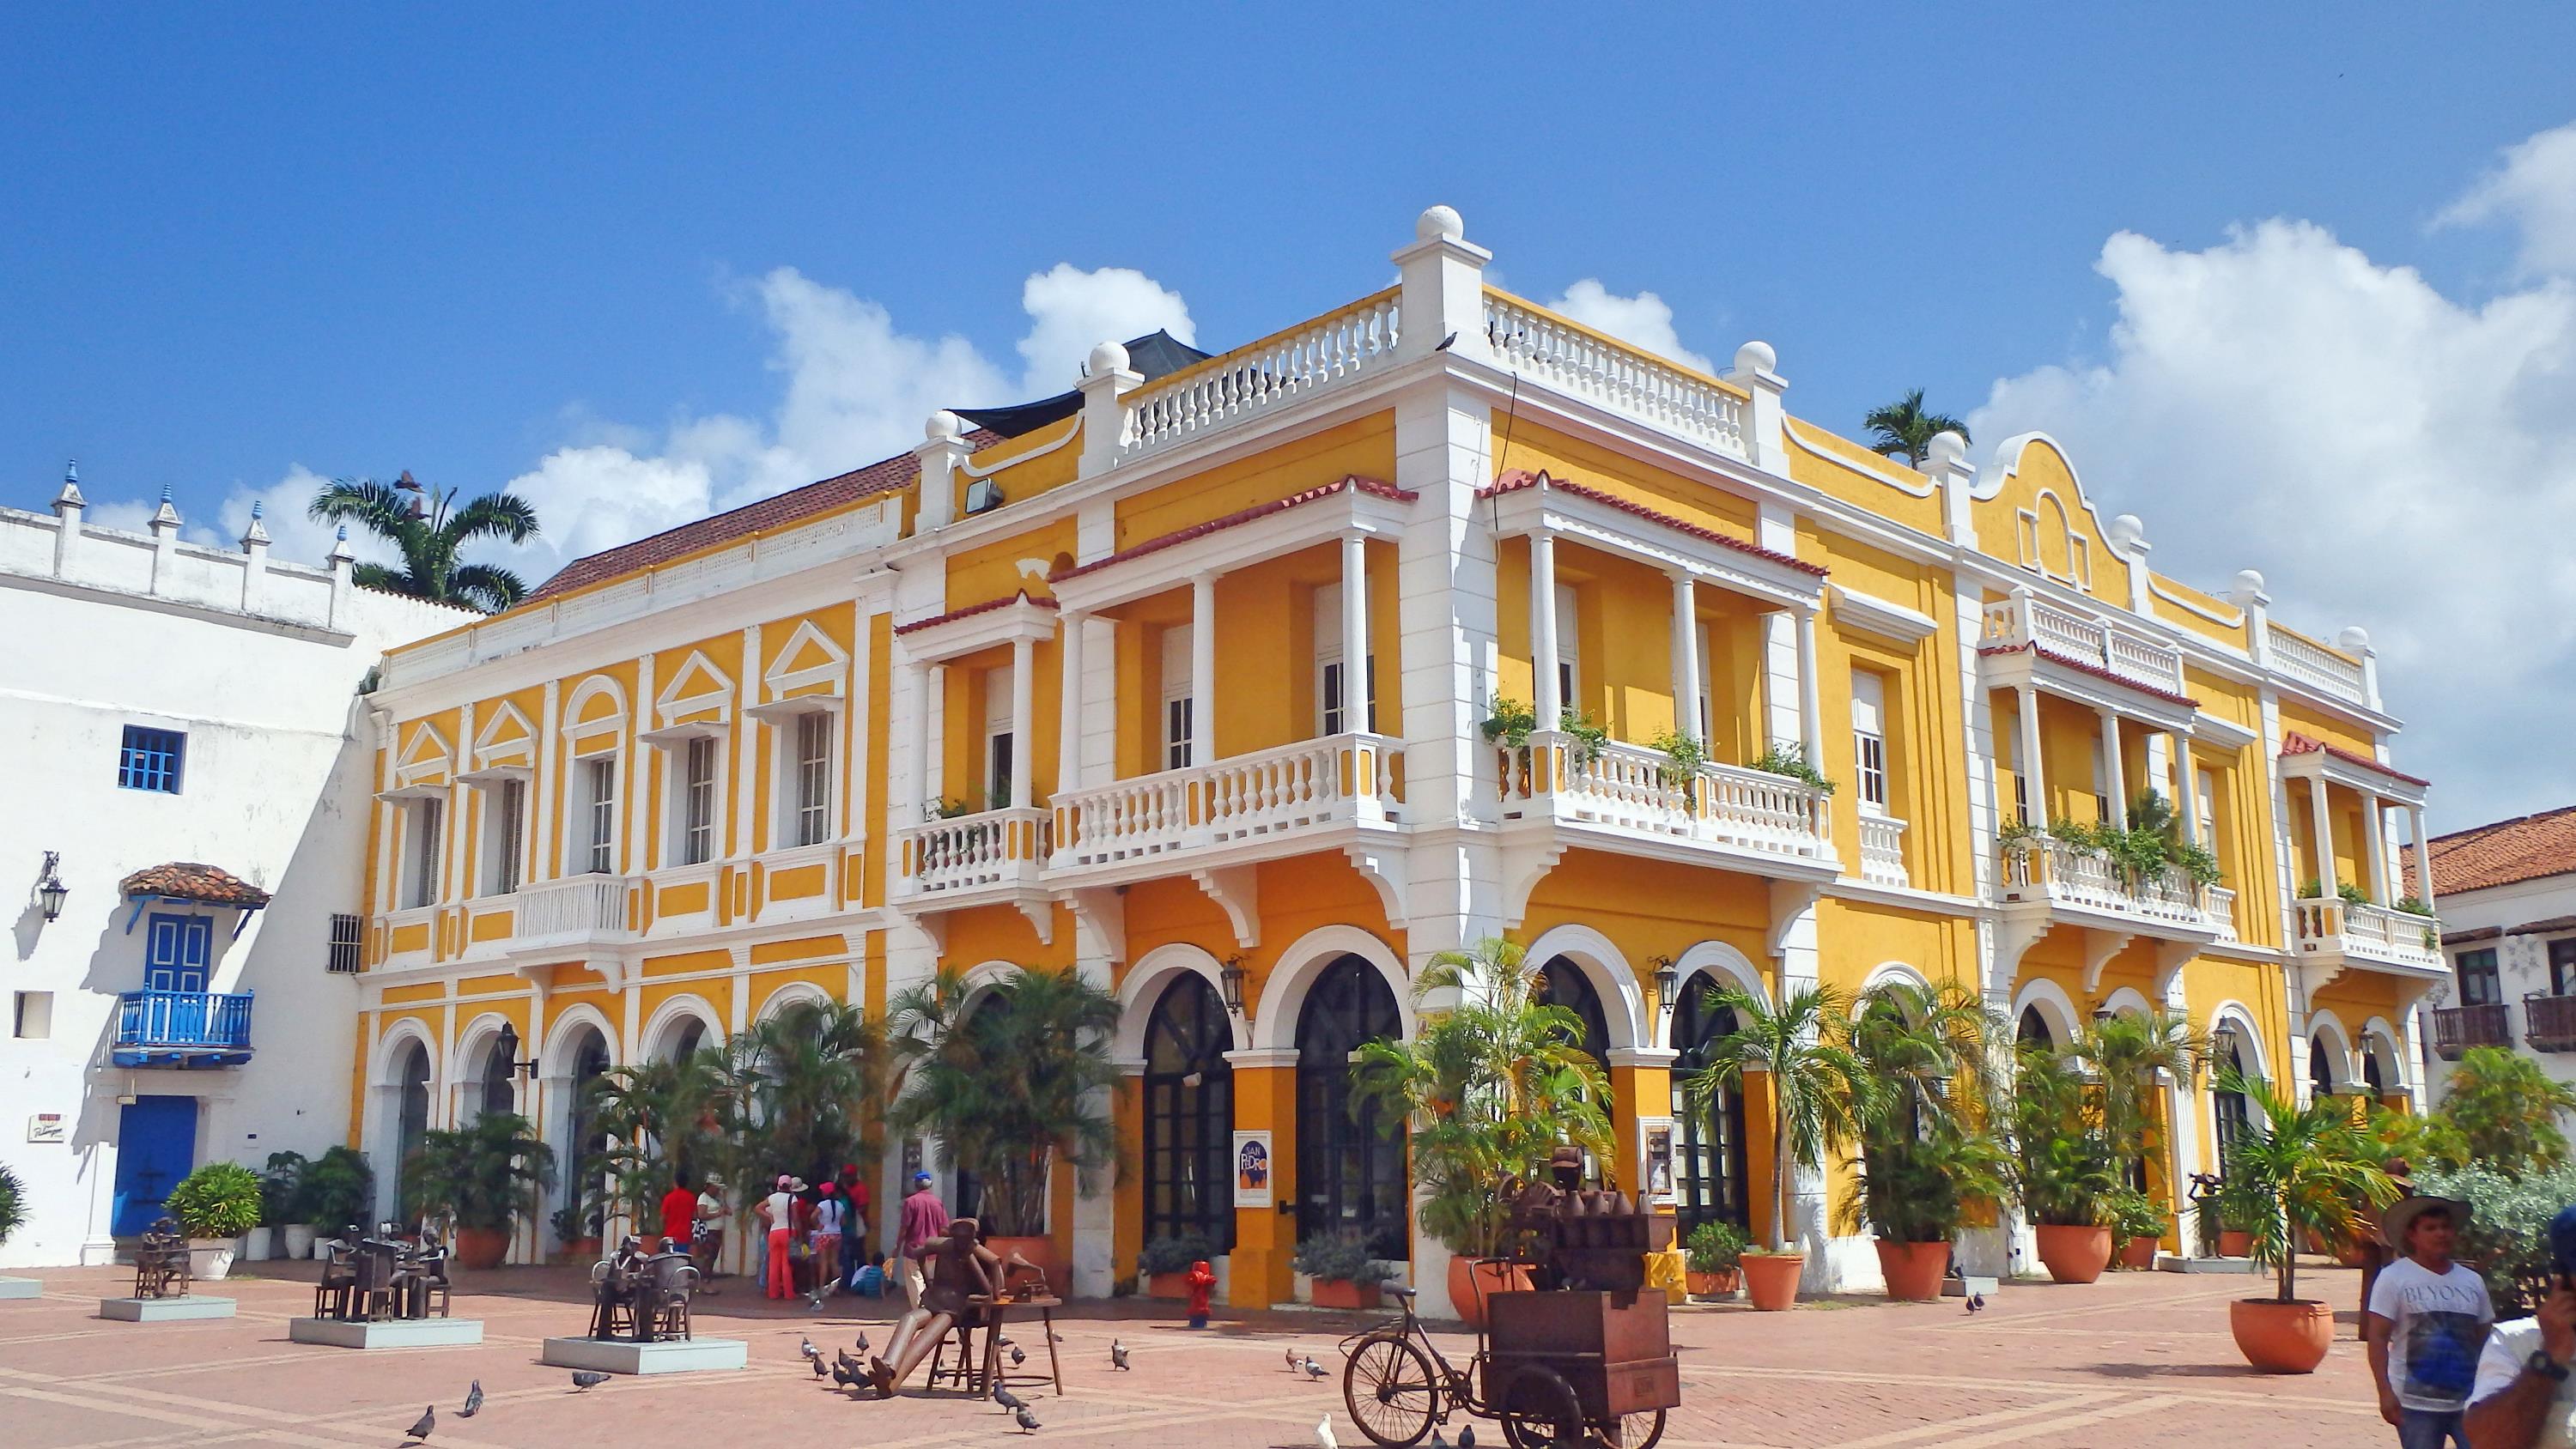 Old Town Plaza, Cartagena